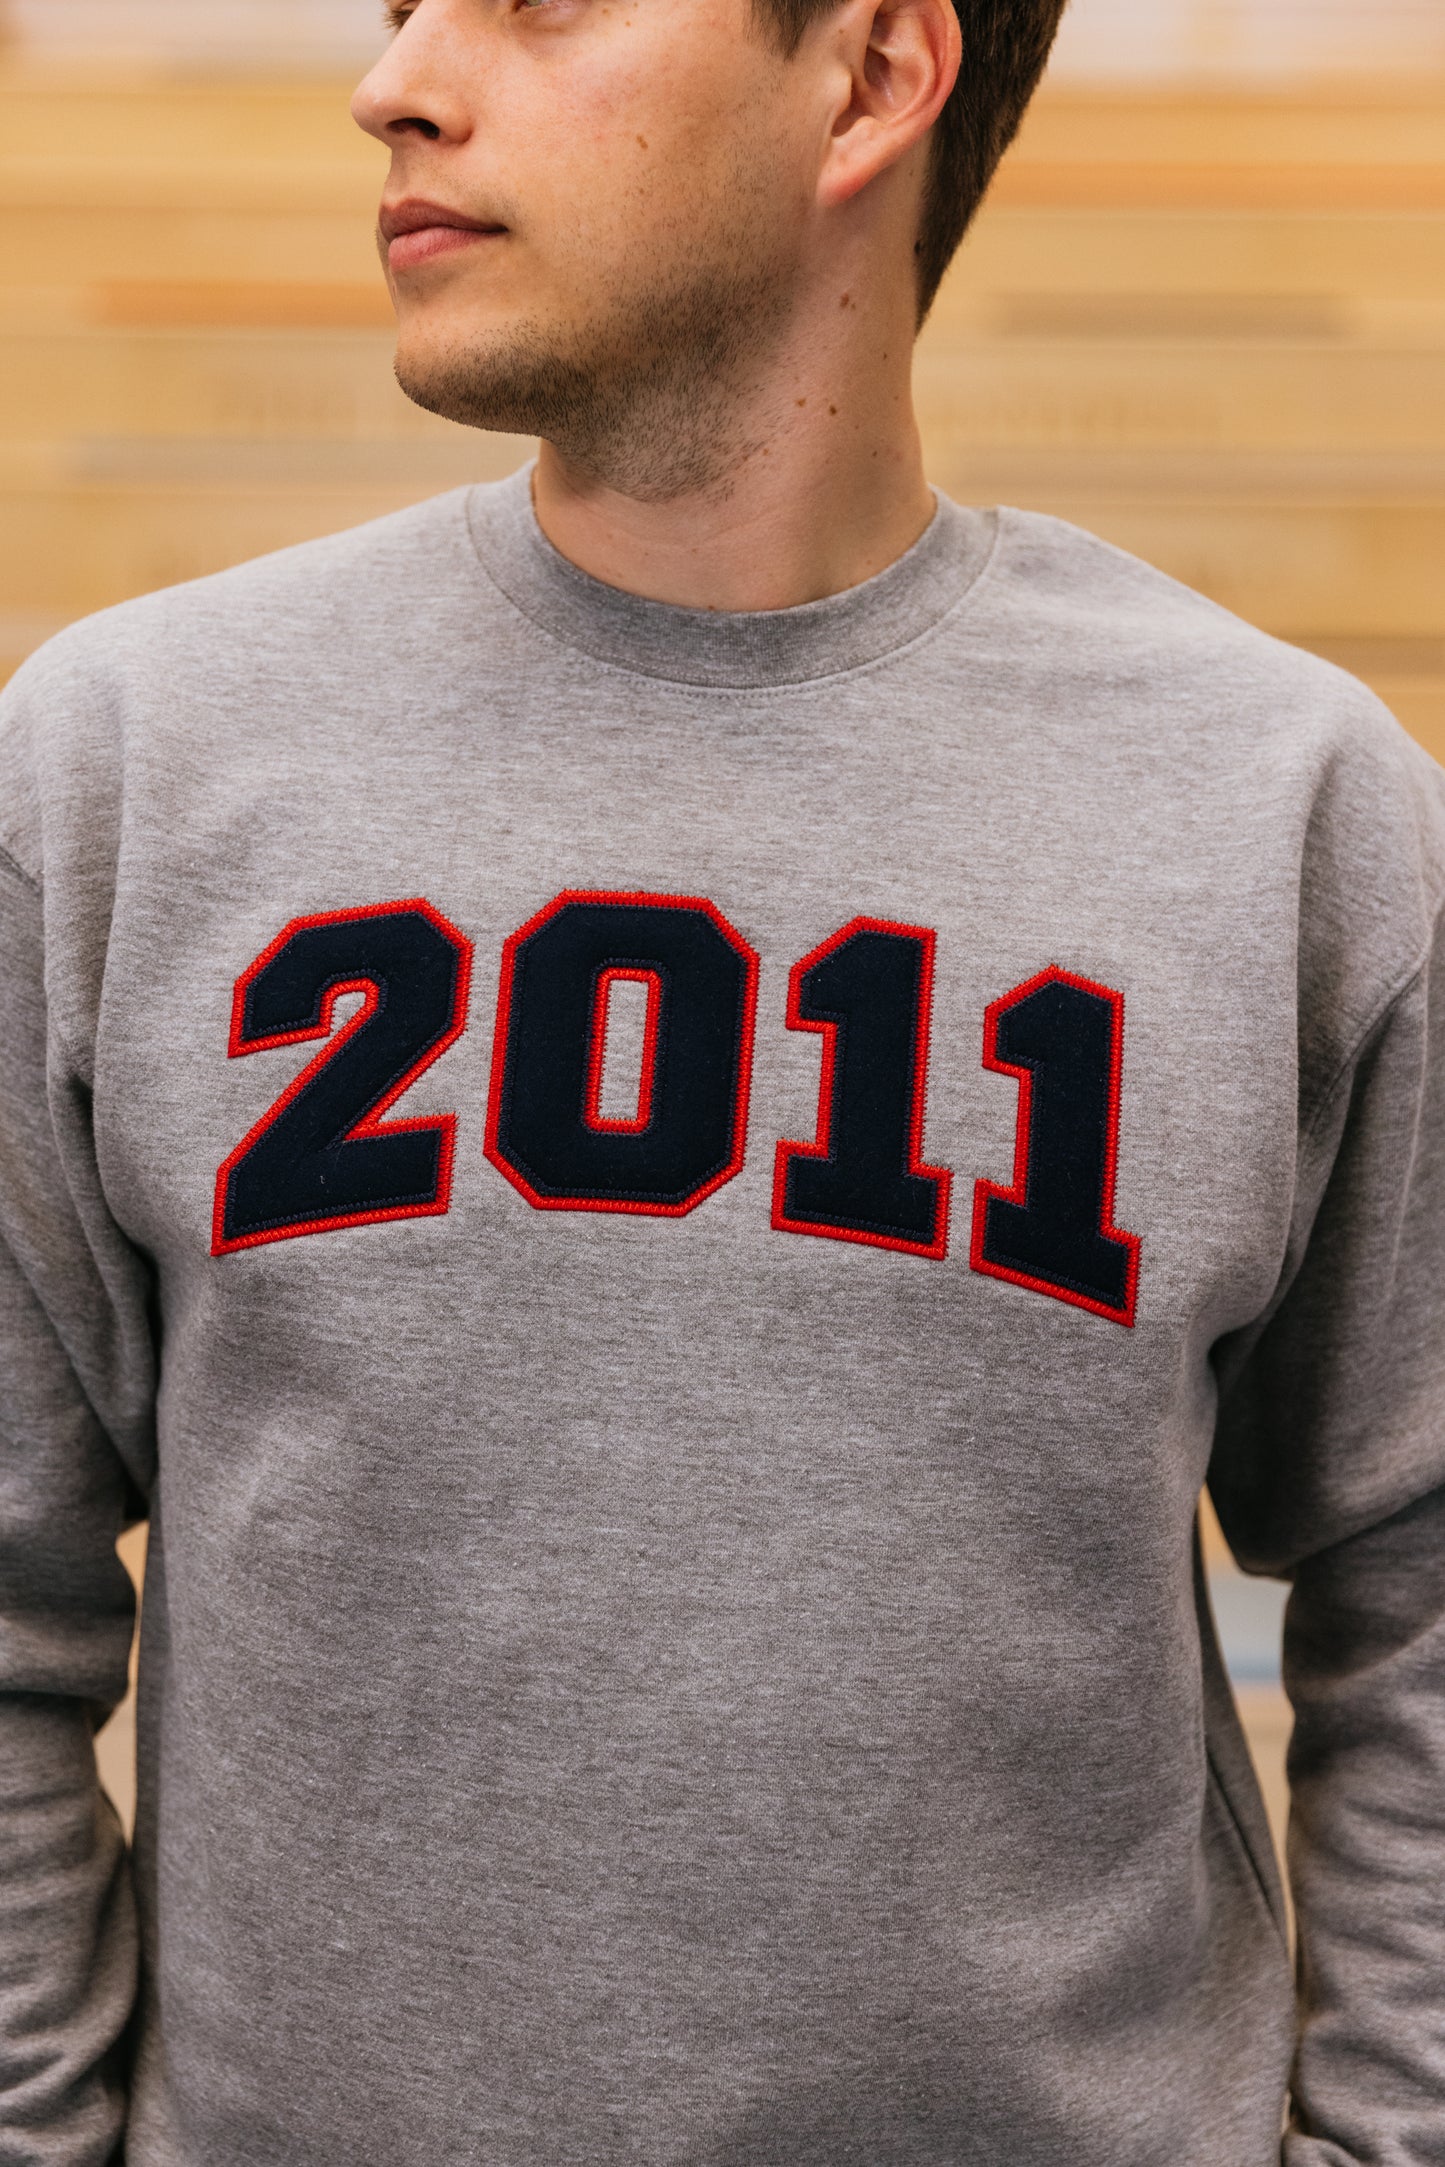 2011 Sweatshirt - GREY